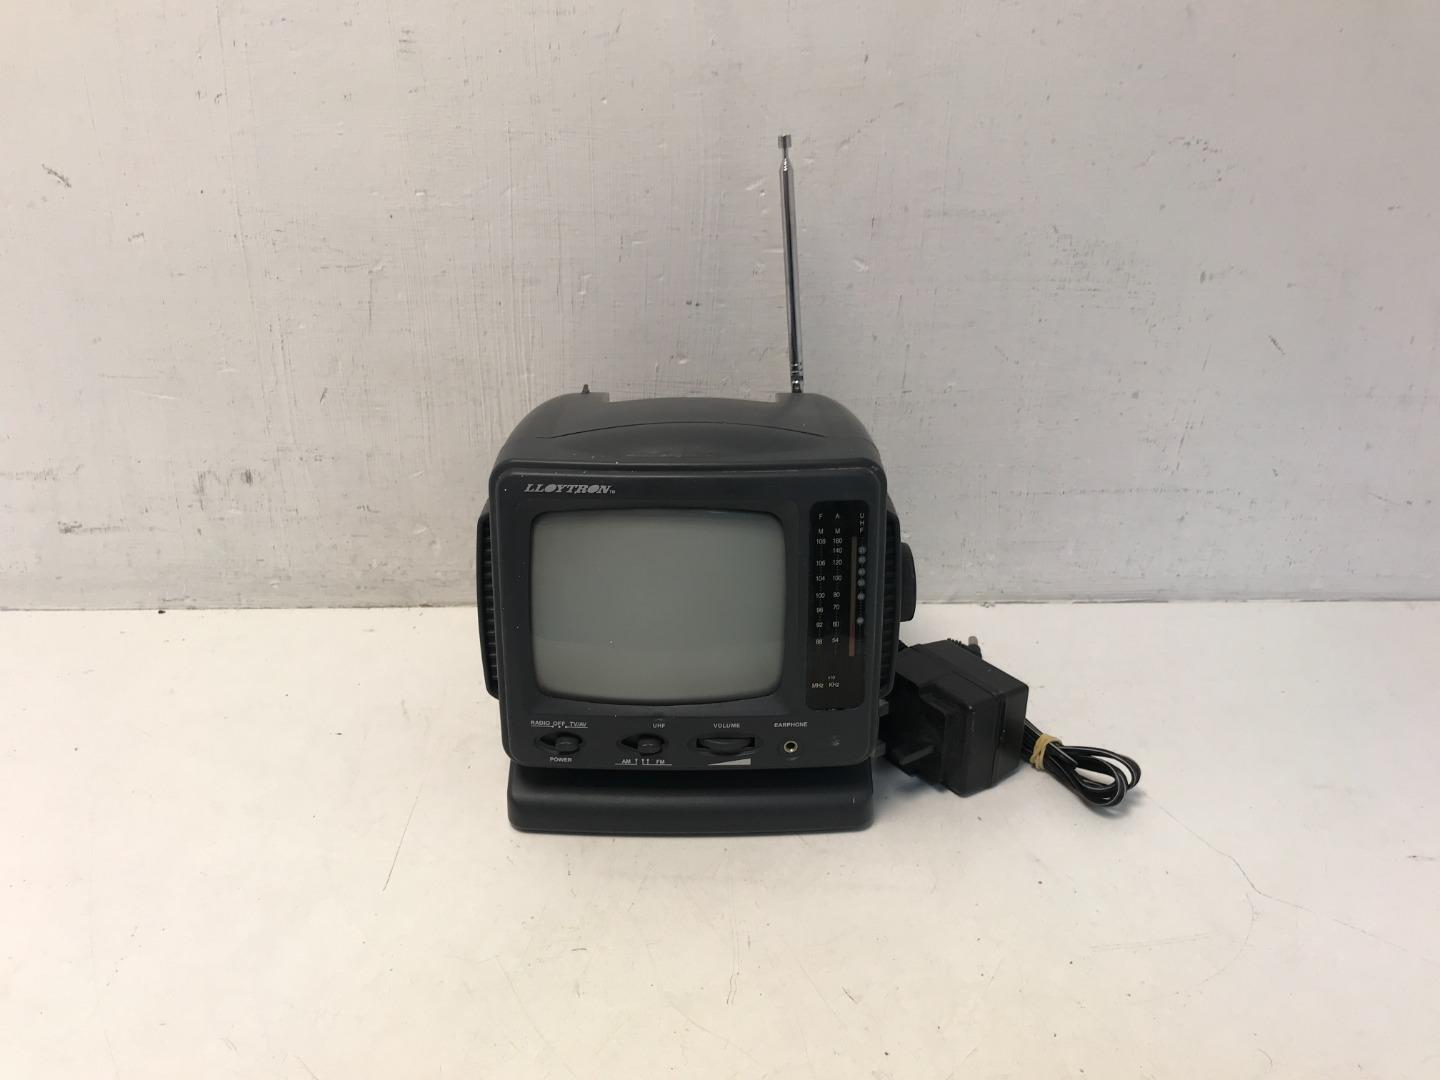 Portable Mini Television, Black and White Portable TV and AM/FM